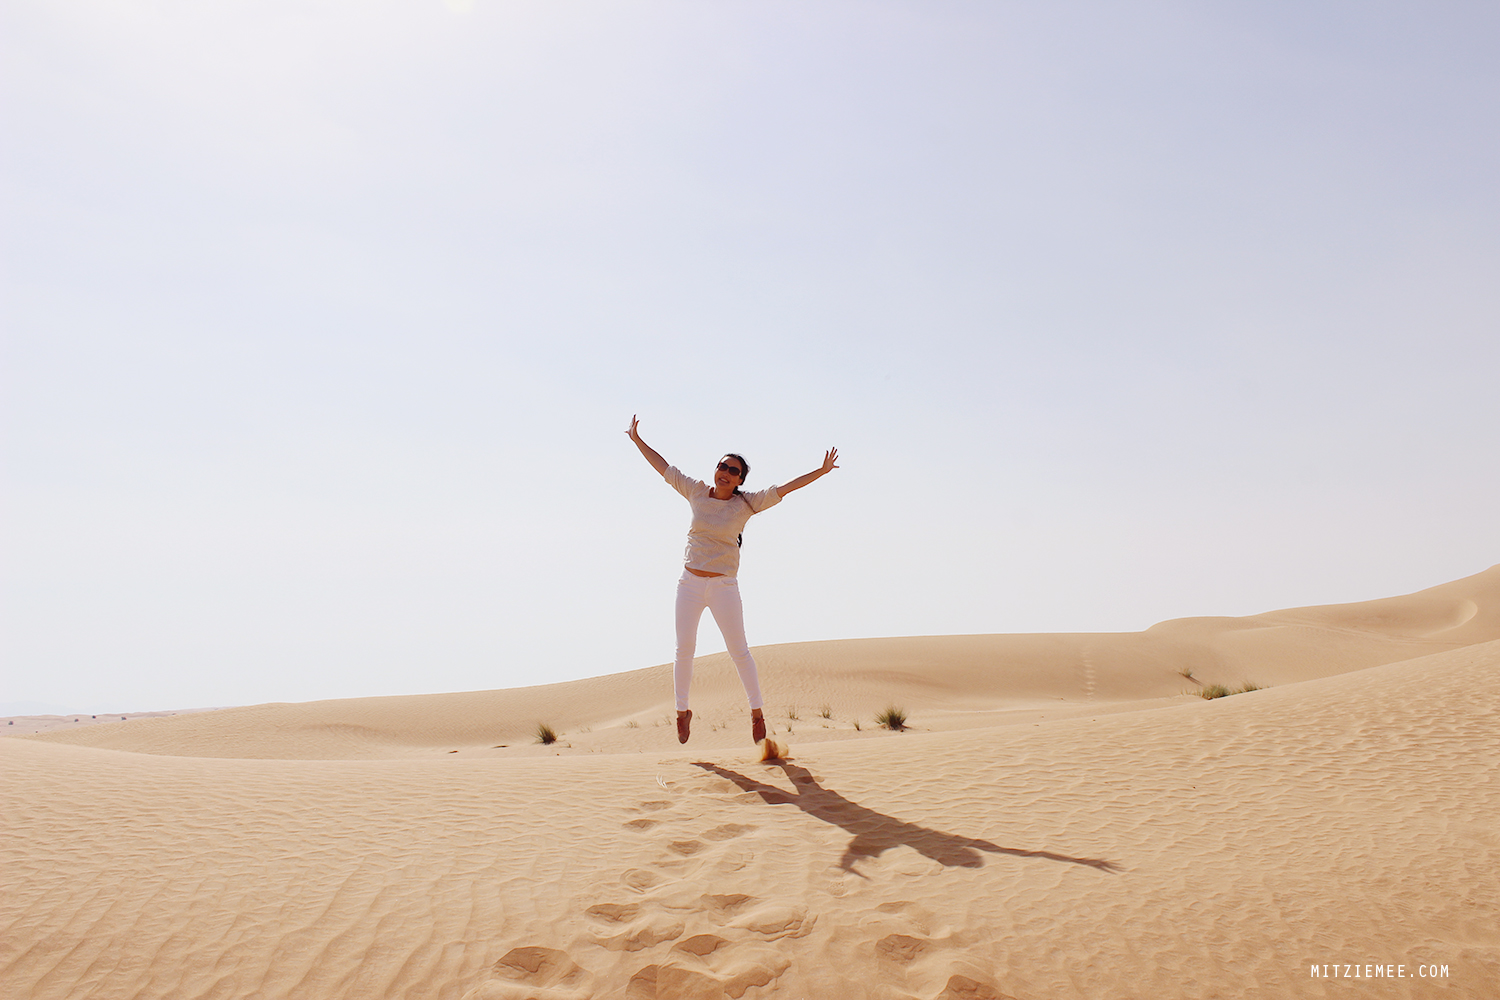 Ørkensafari i Dubai